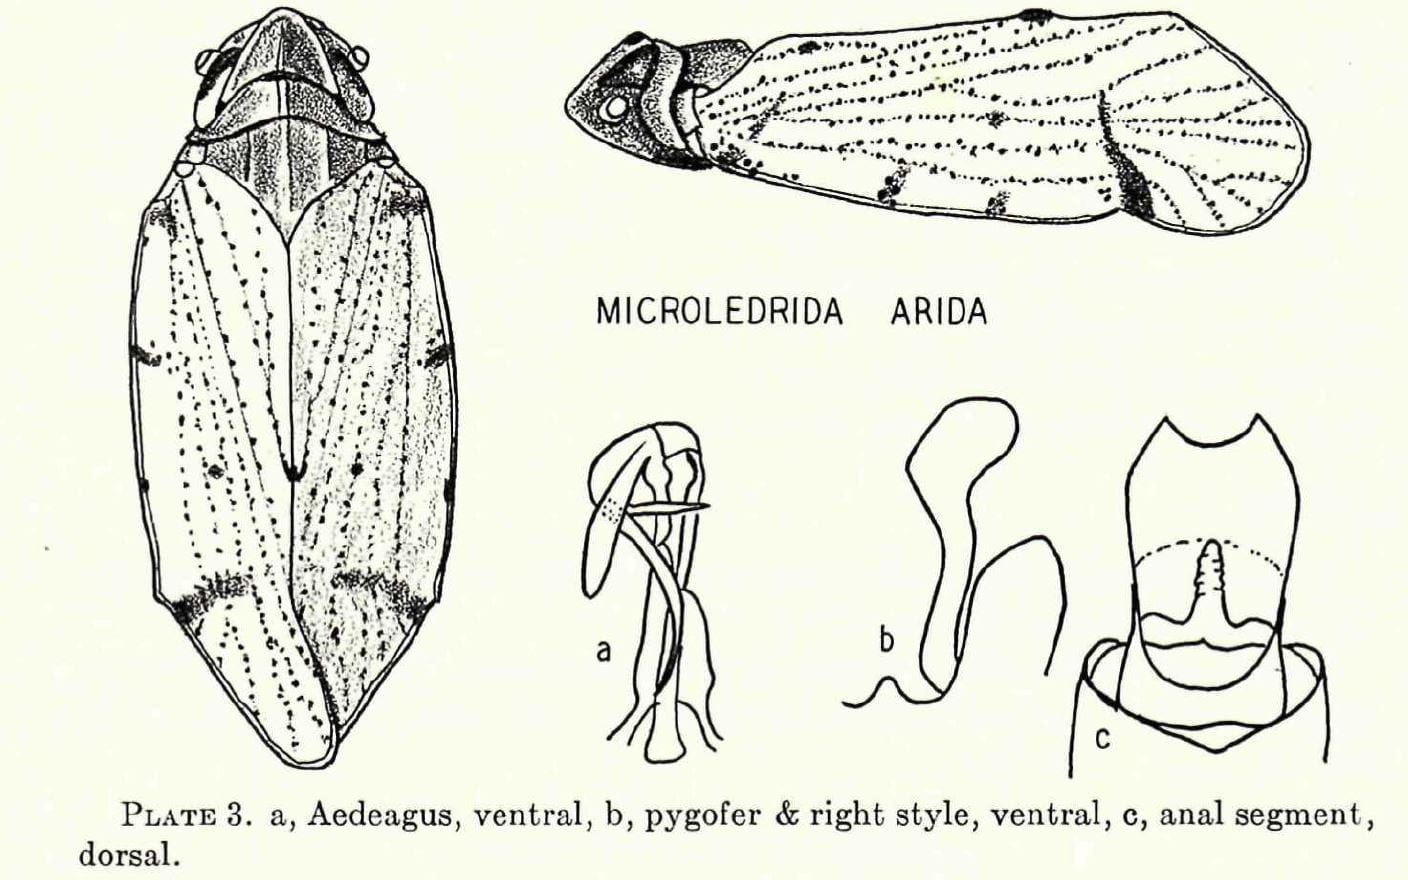 Microledrida arida from Caldwell and Martorell 1951